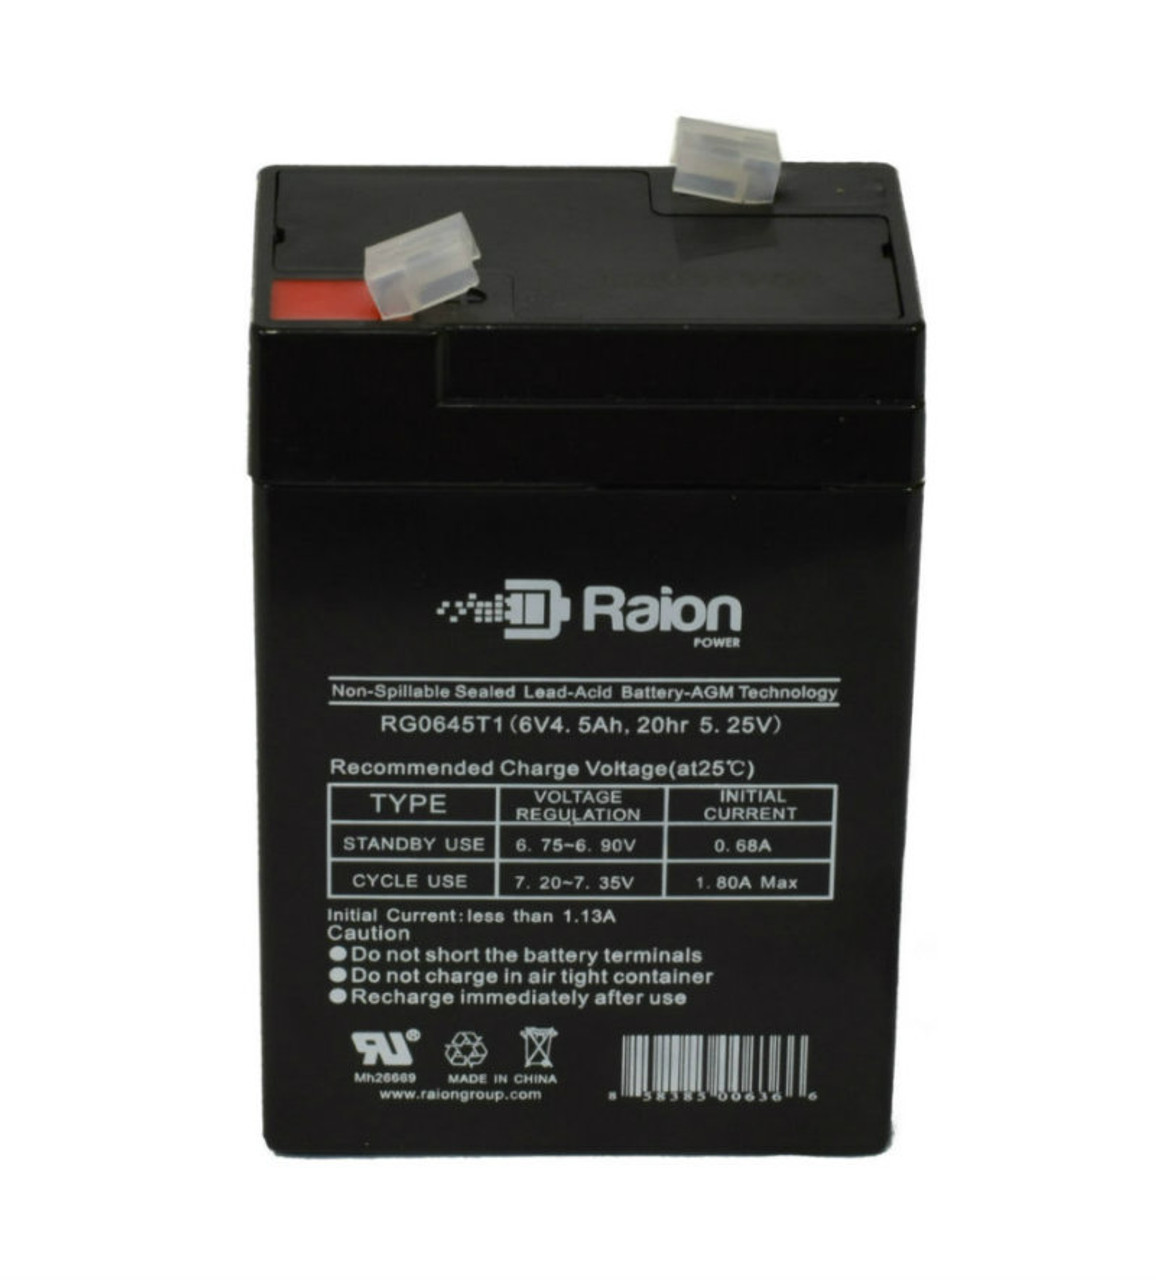 Raion Power RG0645T1 Replacement Battery Cartridge for Koyosonic NP3.5-6